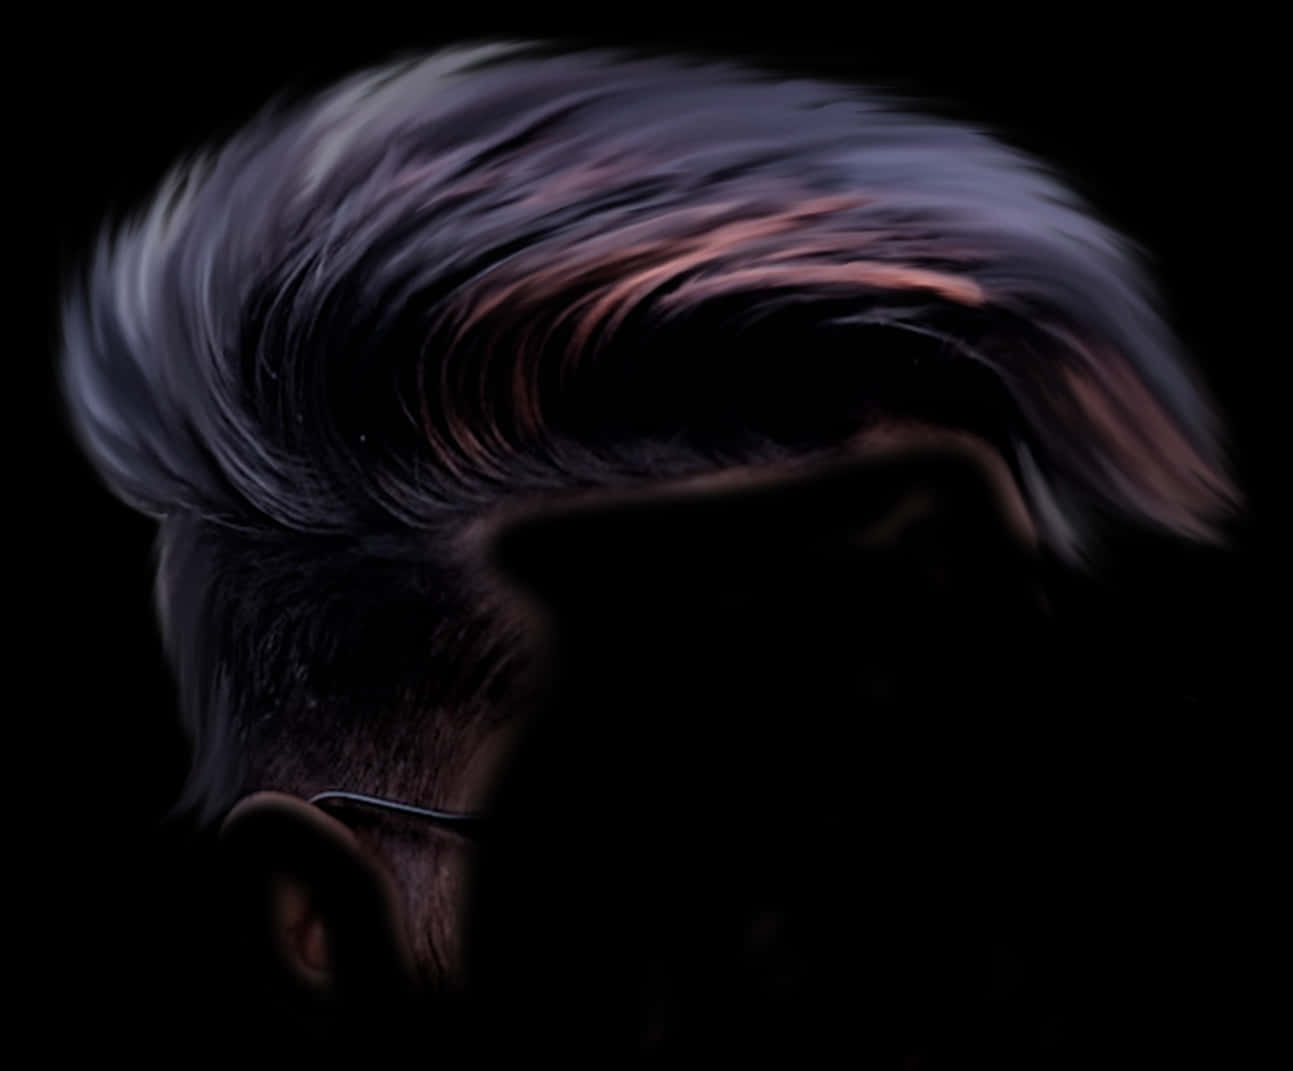 A Close Up Of A Man's Hair